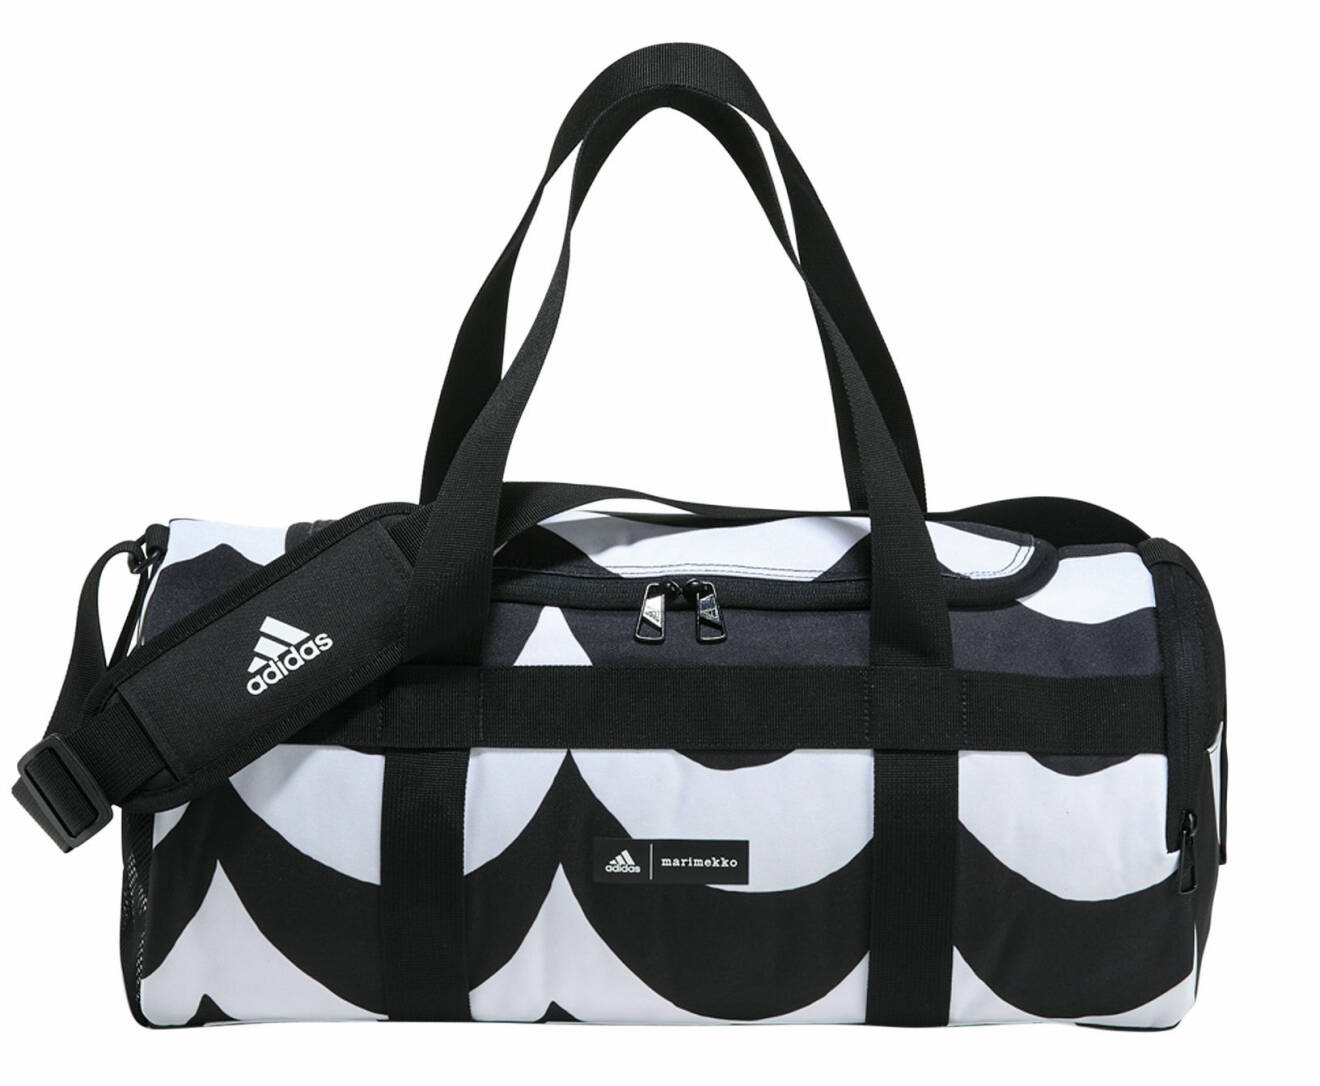 mönstrad weekend väska från marimekko x adidas